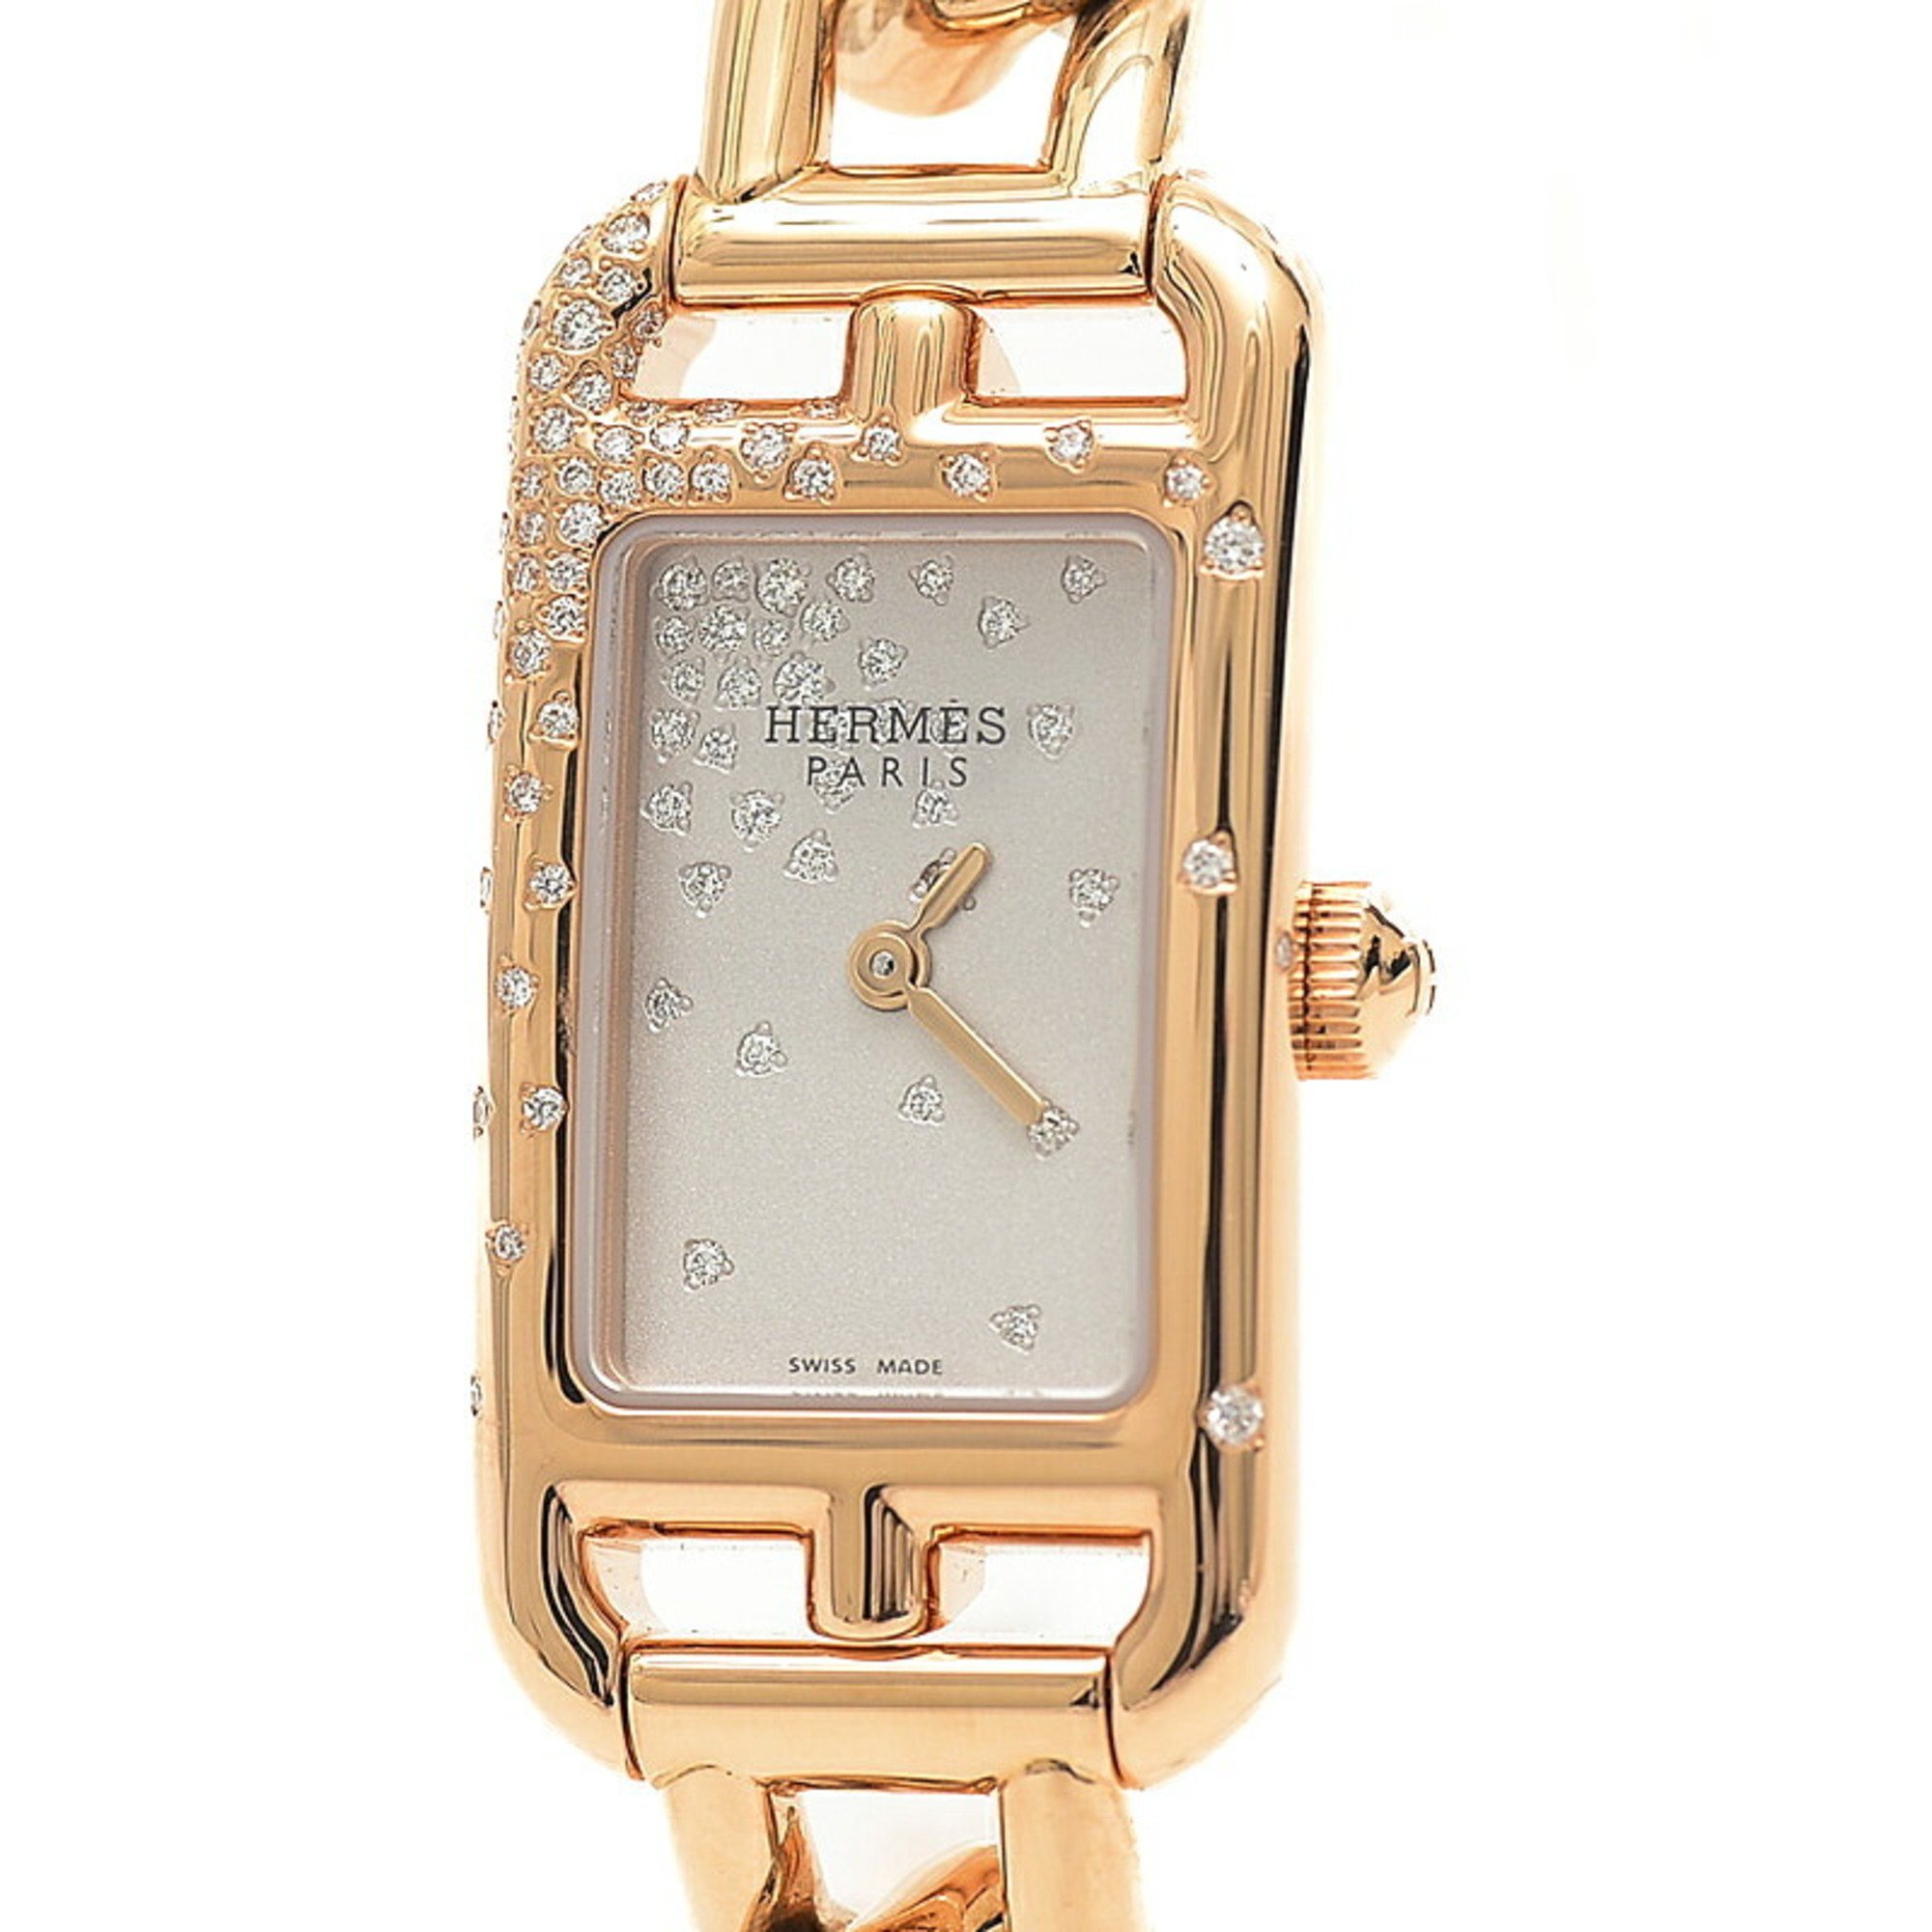 Hermes Nantucket Women's Watch White Dial K18PG/Diamond Quartz NA2.172